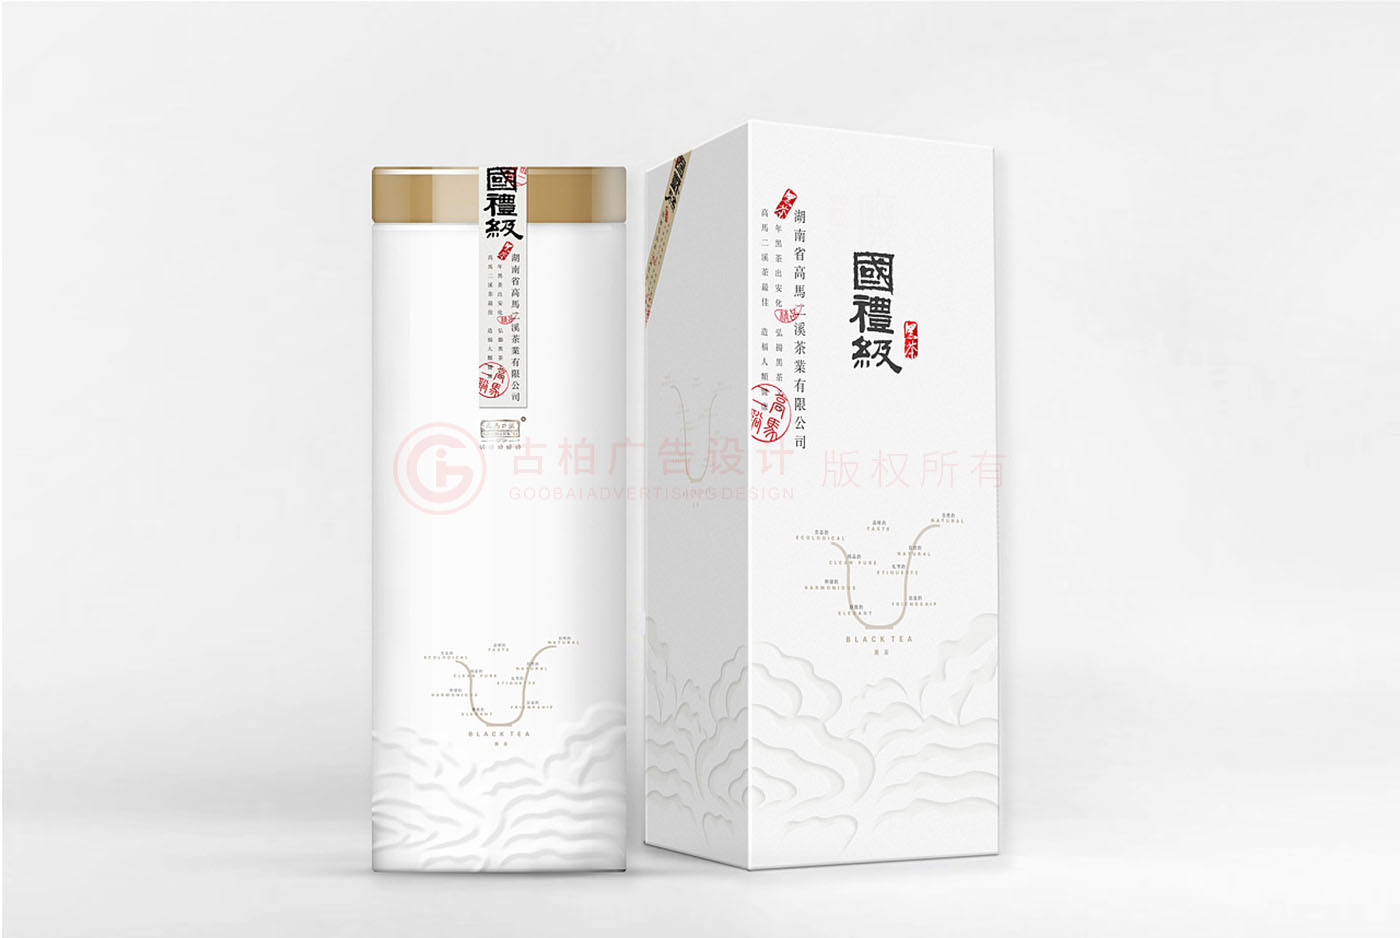 茶叶包装设计,高端茶叶包装设计公司